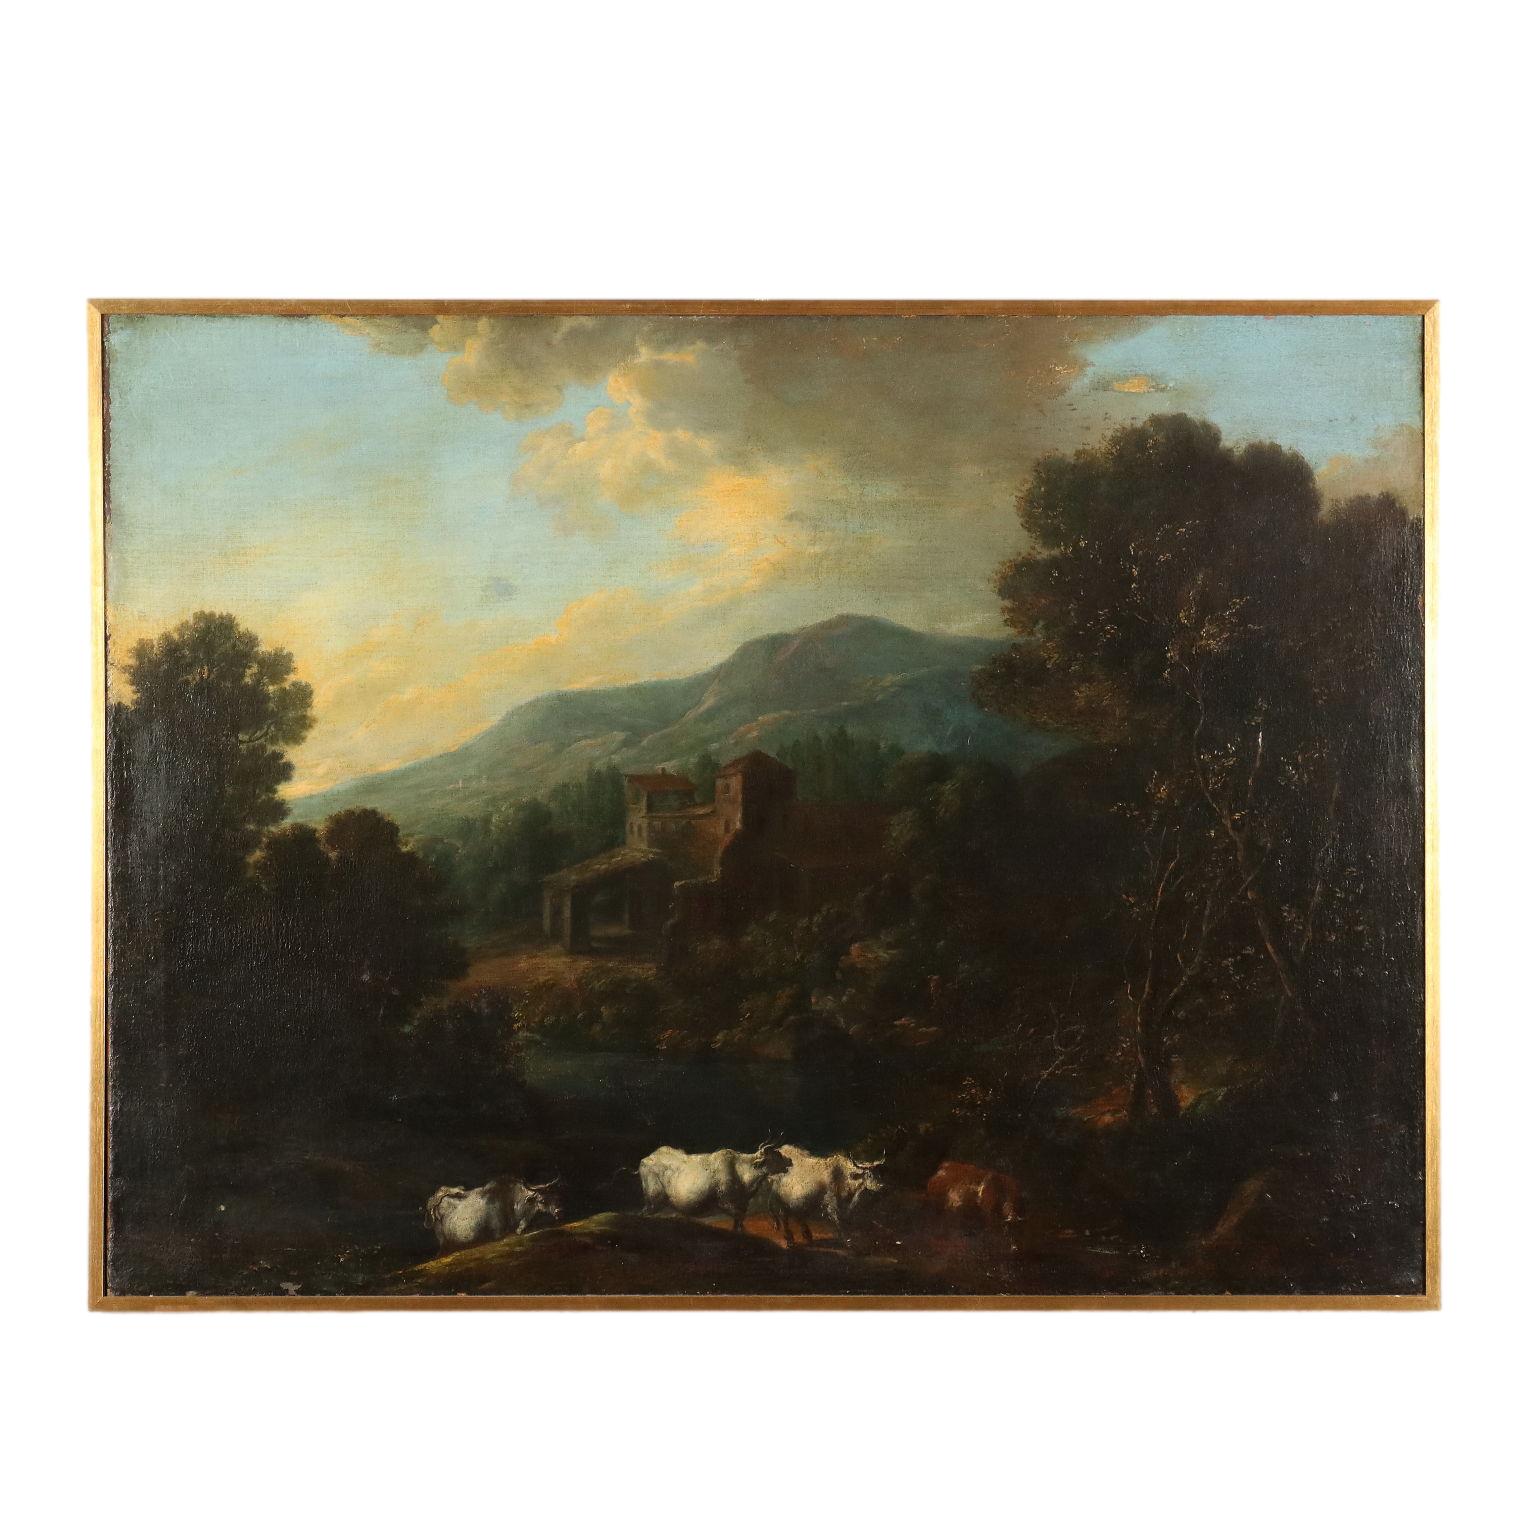 Unknown Landscape Painting - Landscape painting with herdsmen